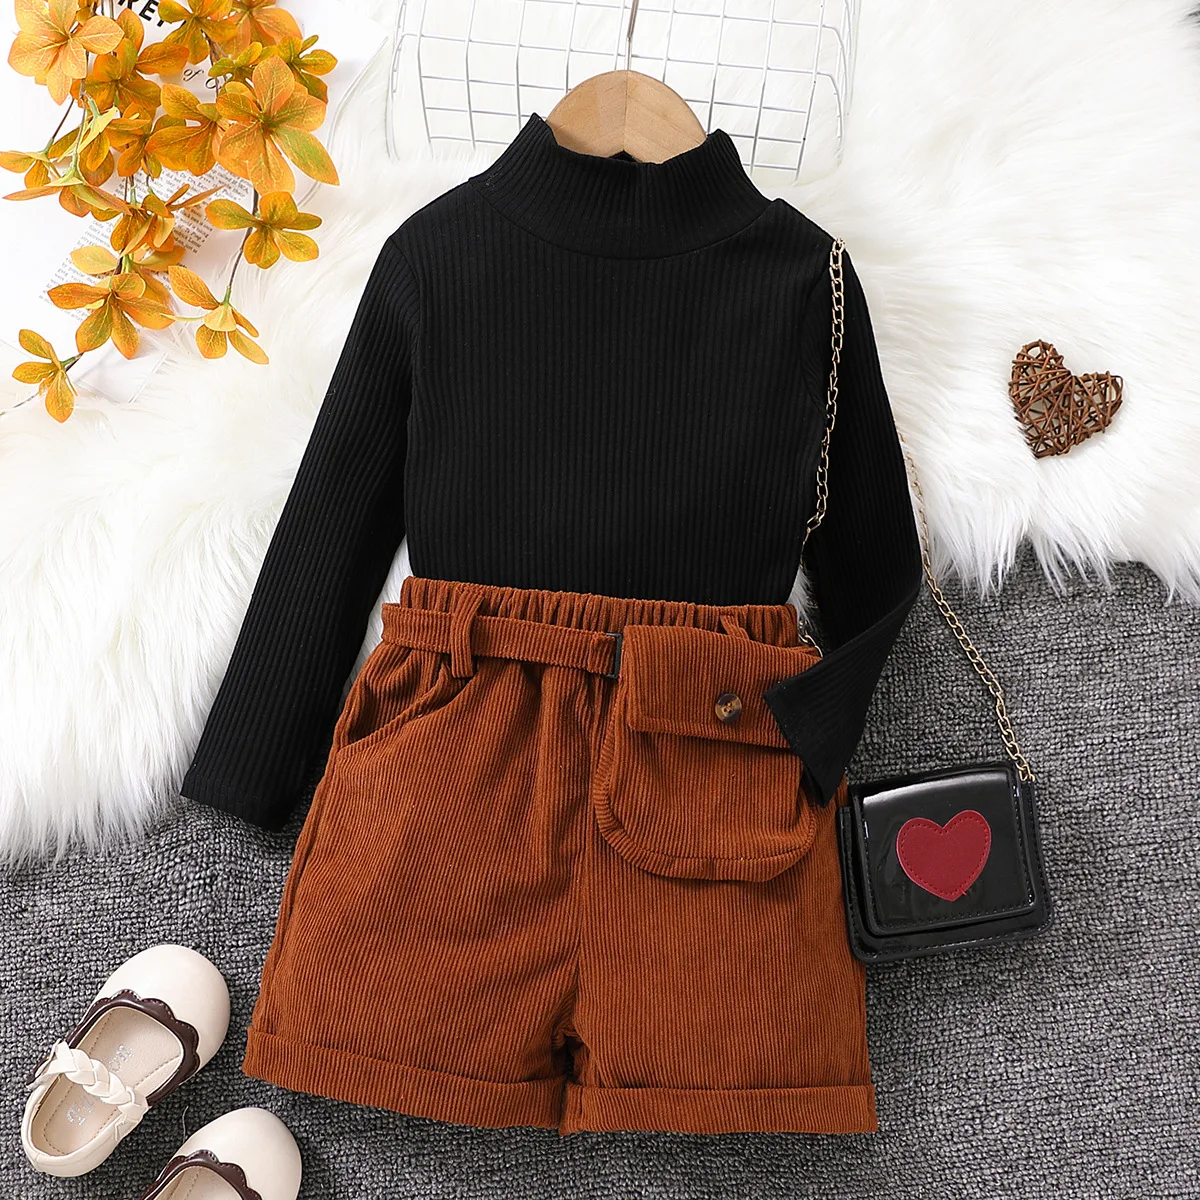 2022 autumn winter girls clothes set children black knitted shirt corduroy shorts waist bag 3pcs outfits kids clothes